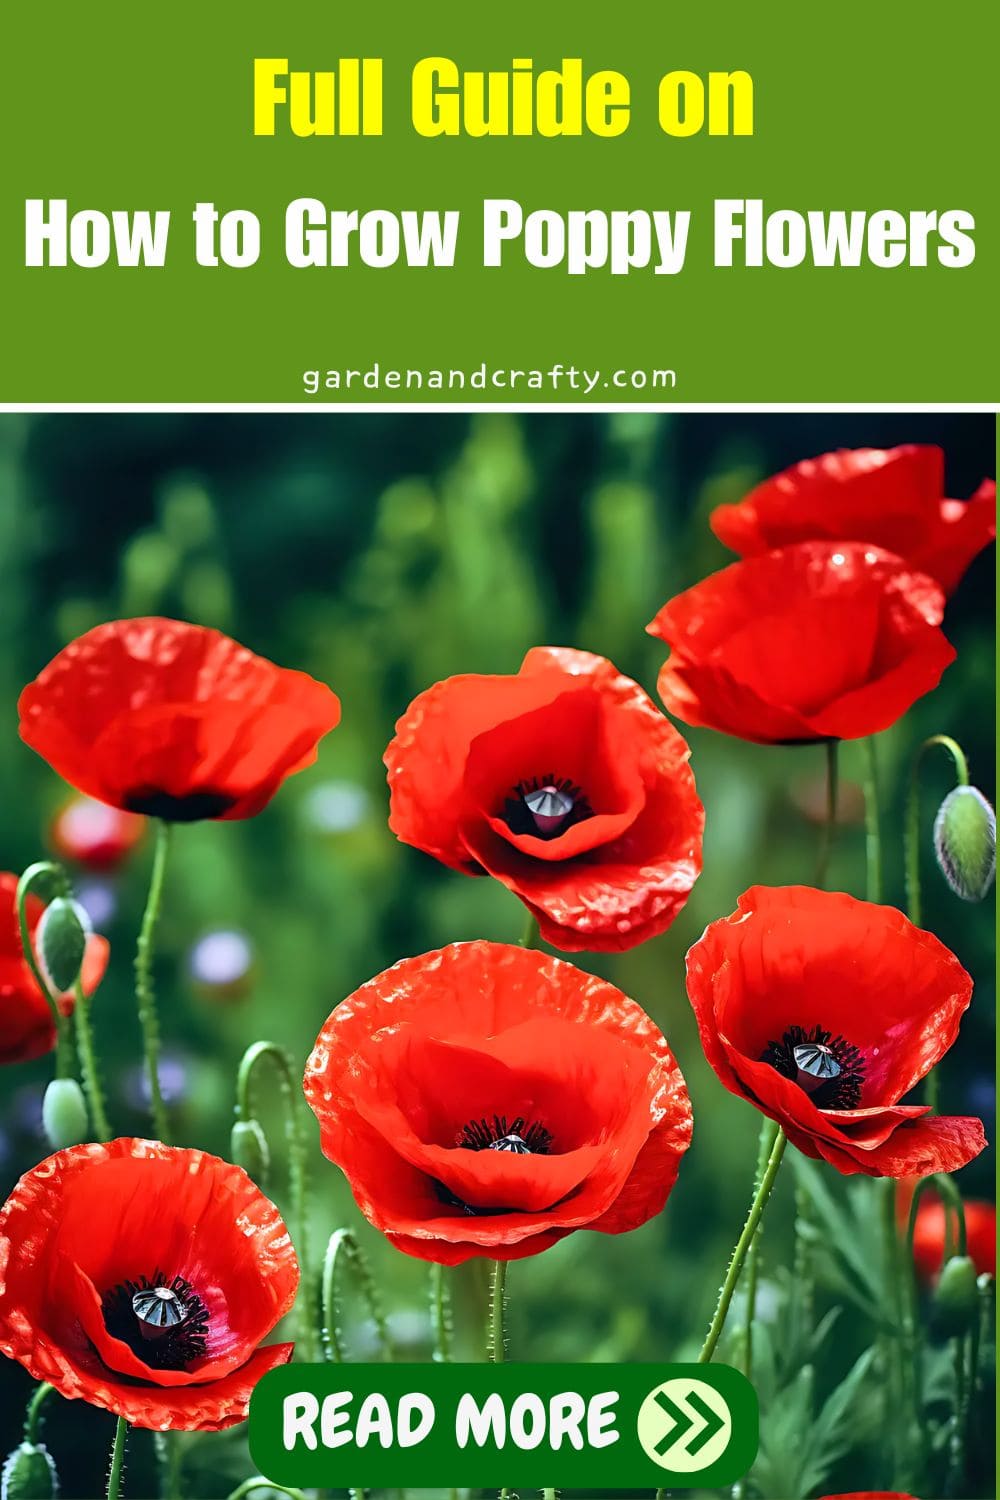 Full Guide on How to Grow Poppy Flowers